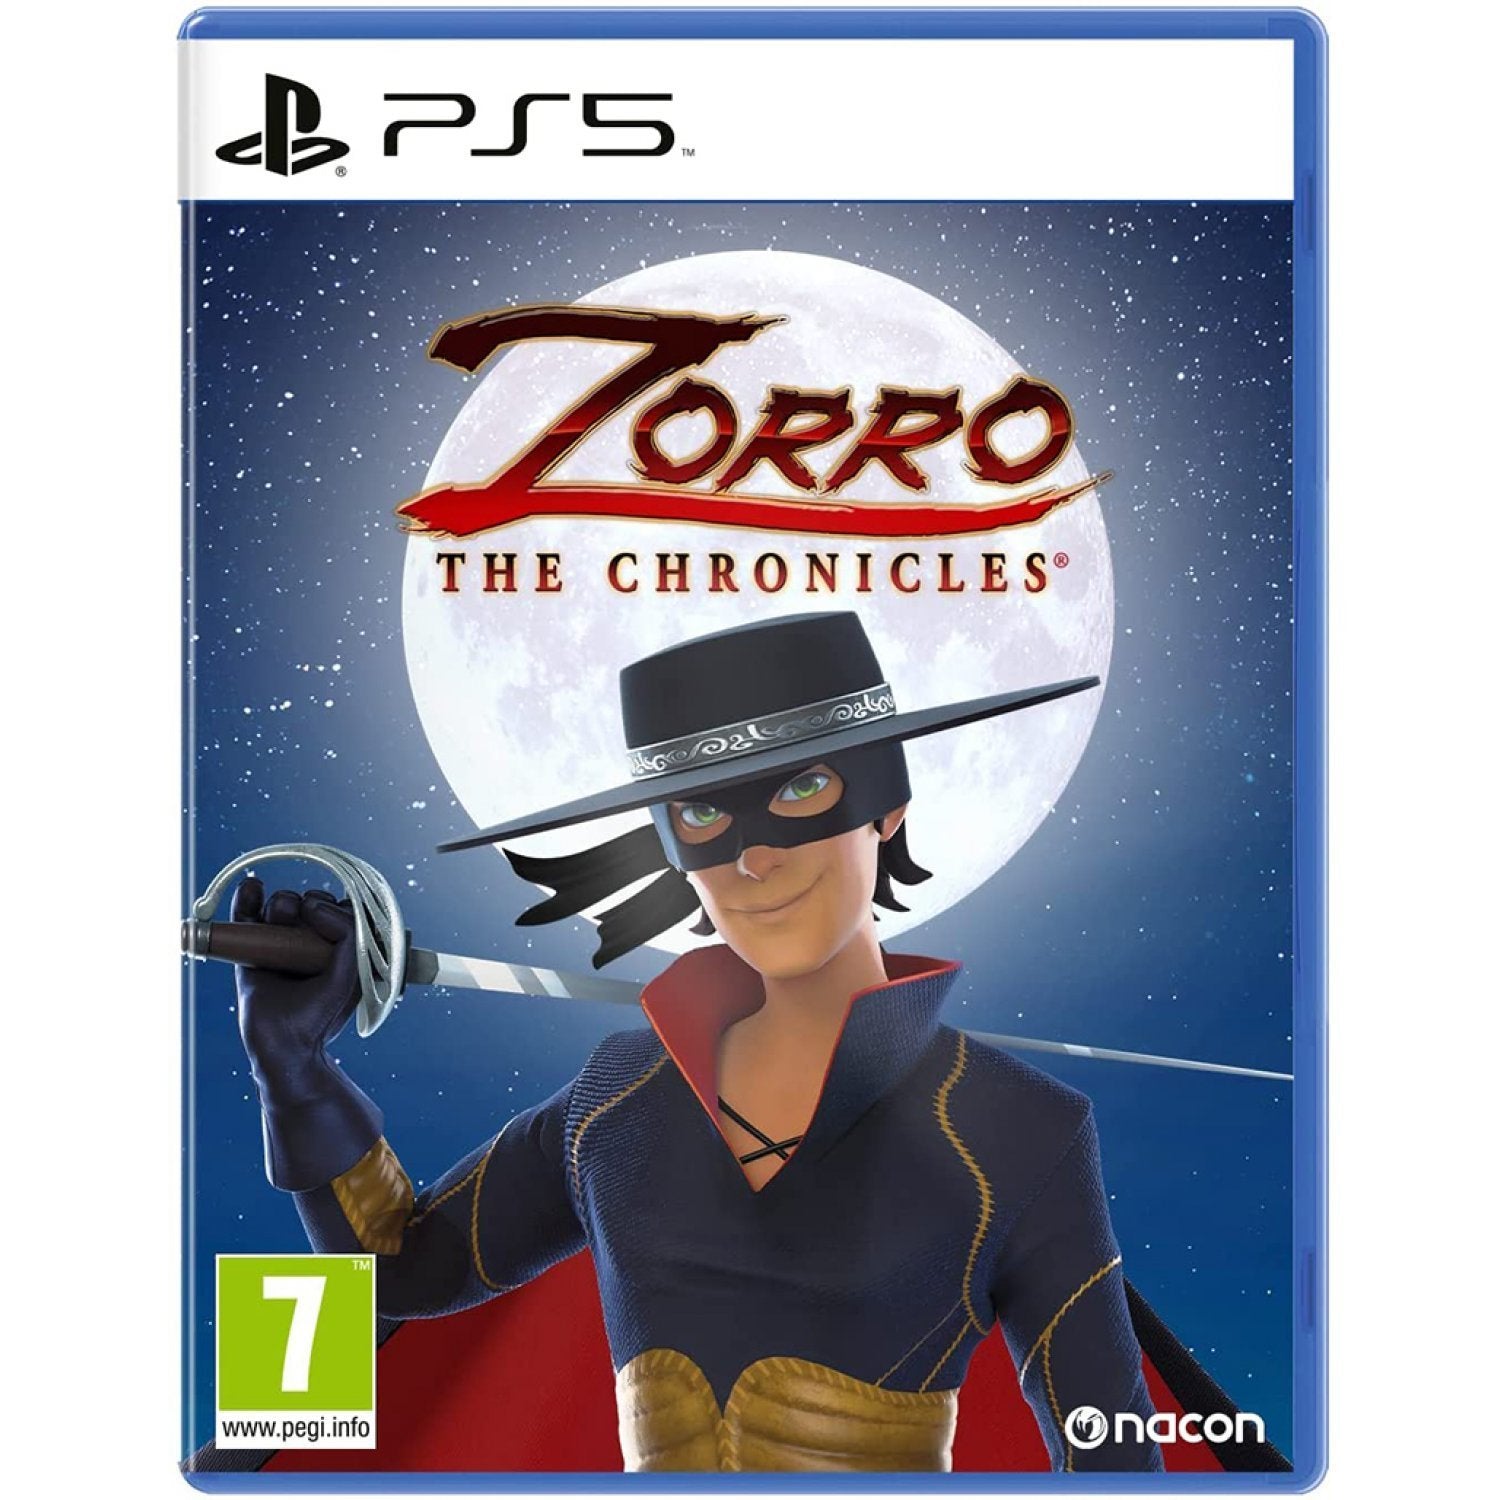 Zorro: The Chronicles – Playstation 5